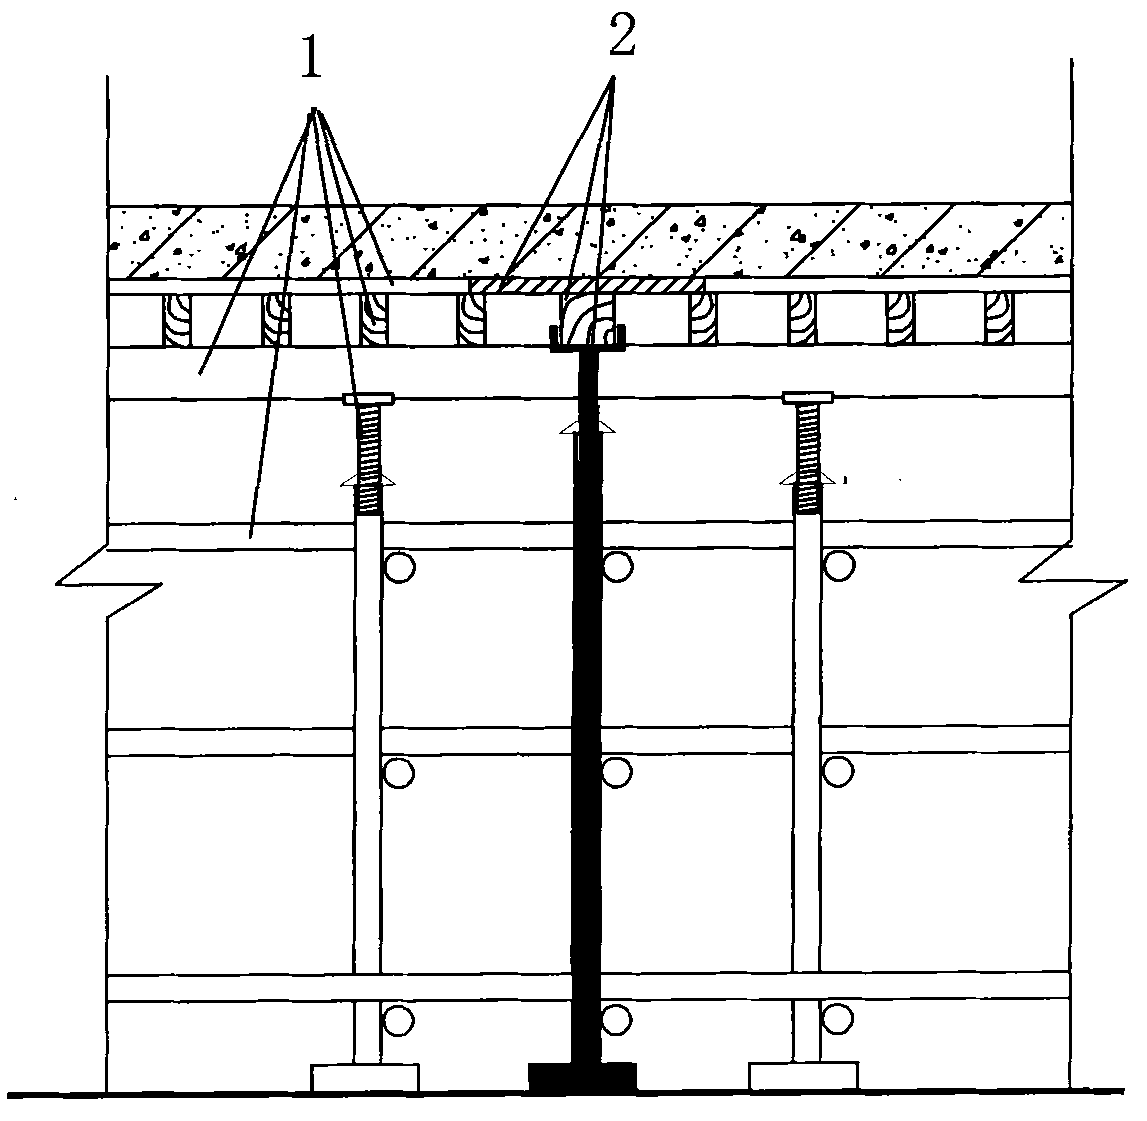 Beam-slab framework early removal construction method